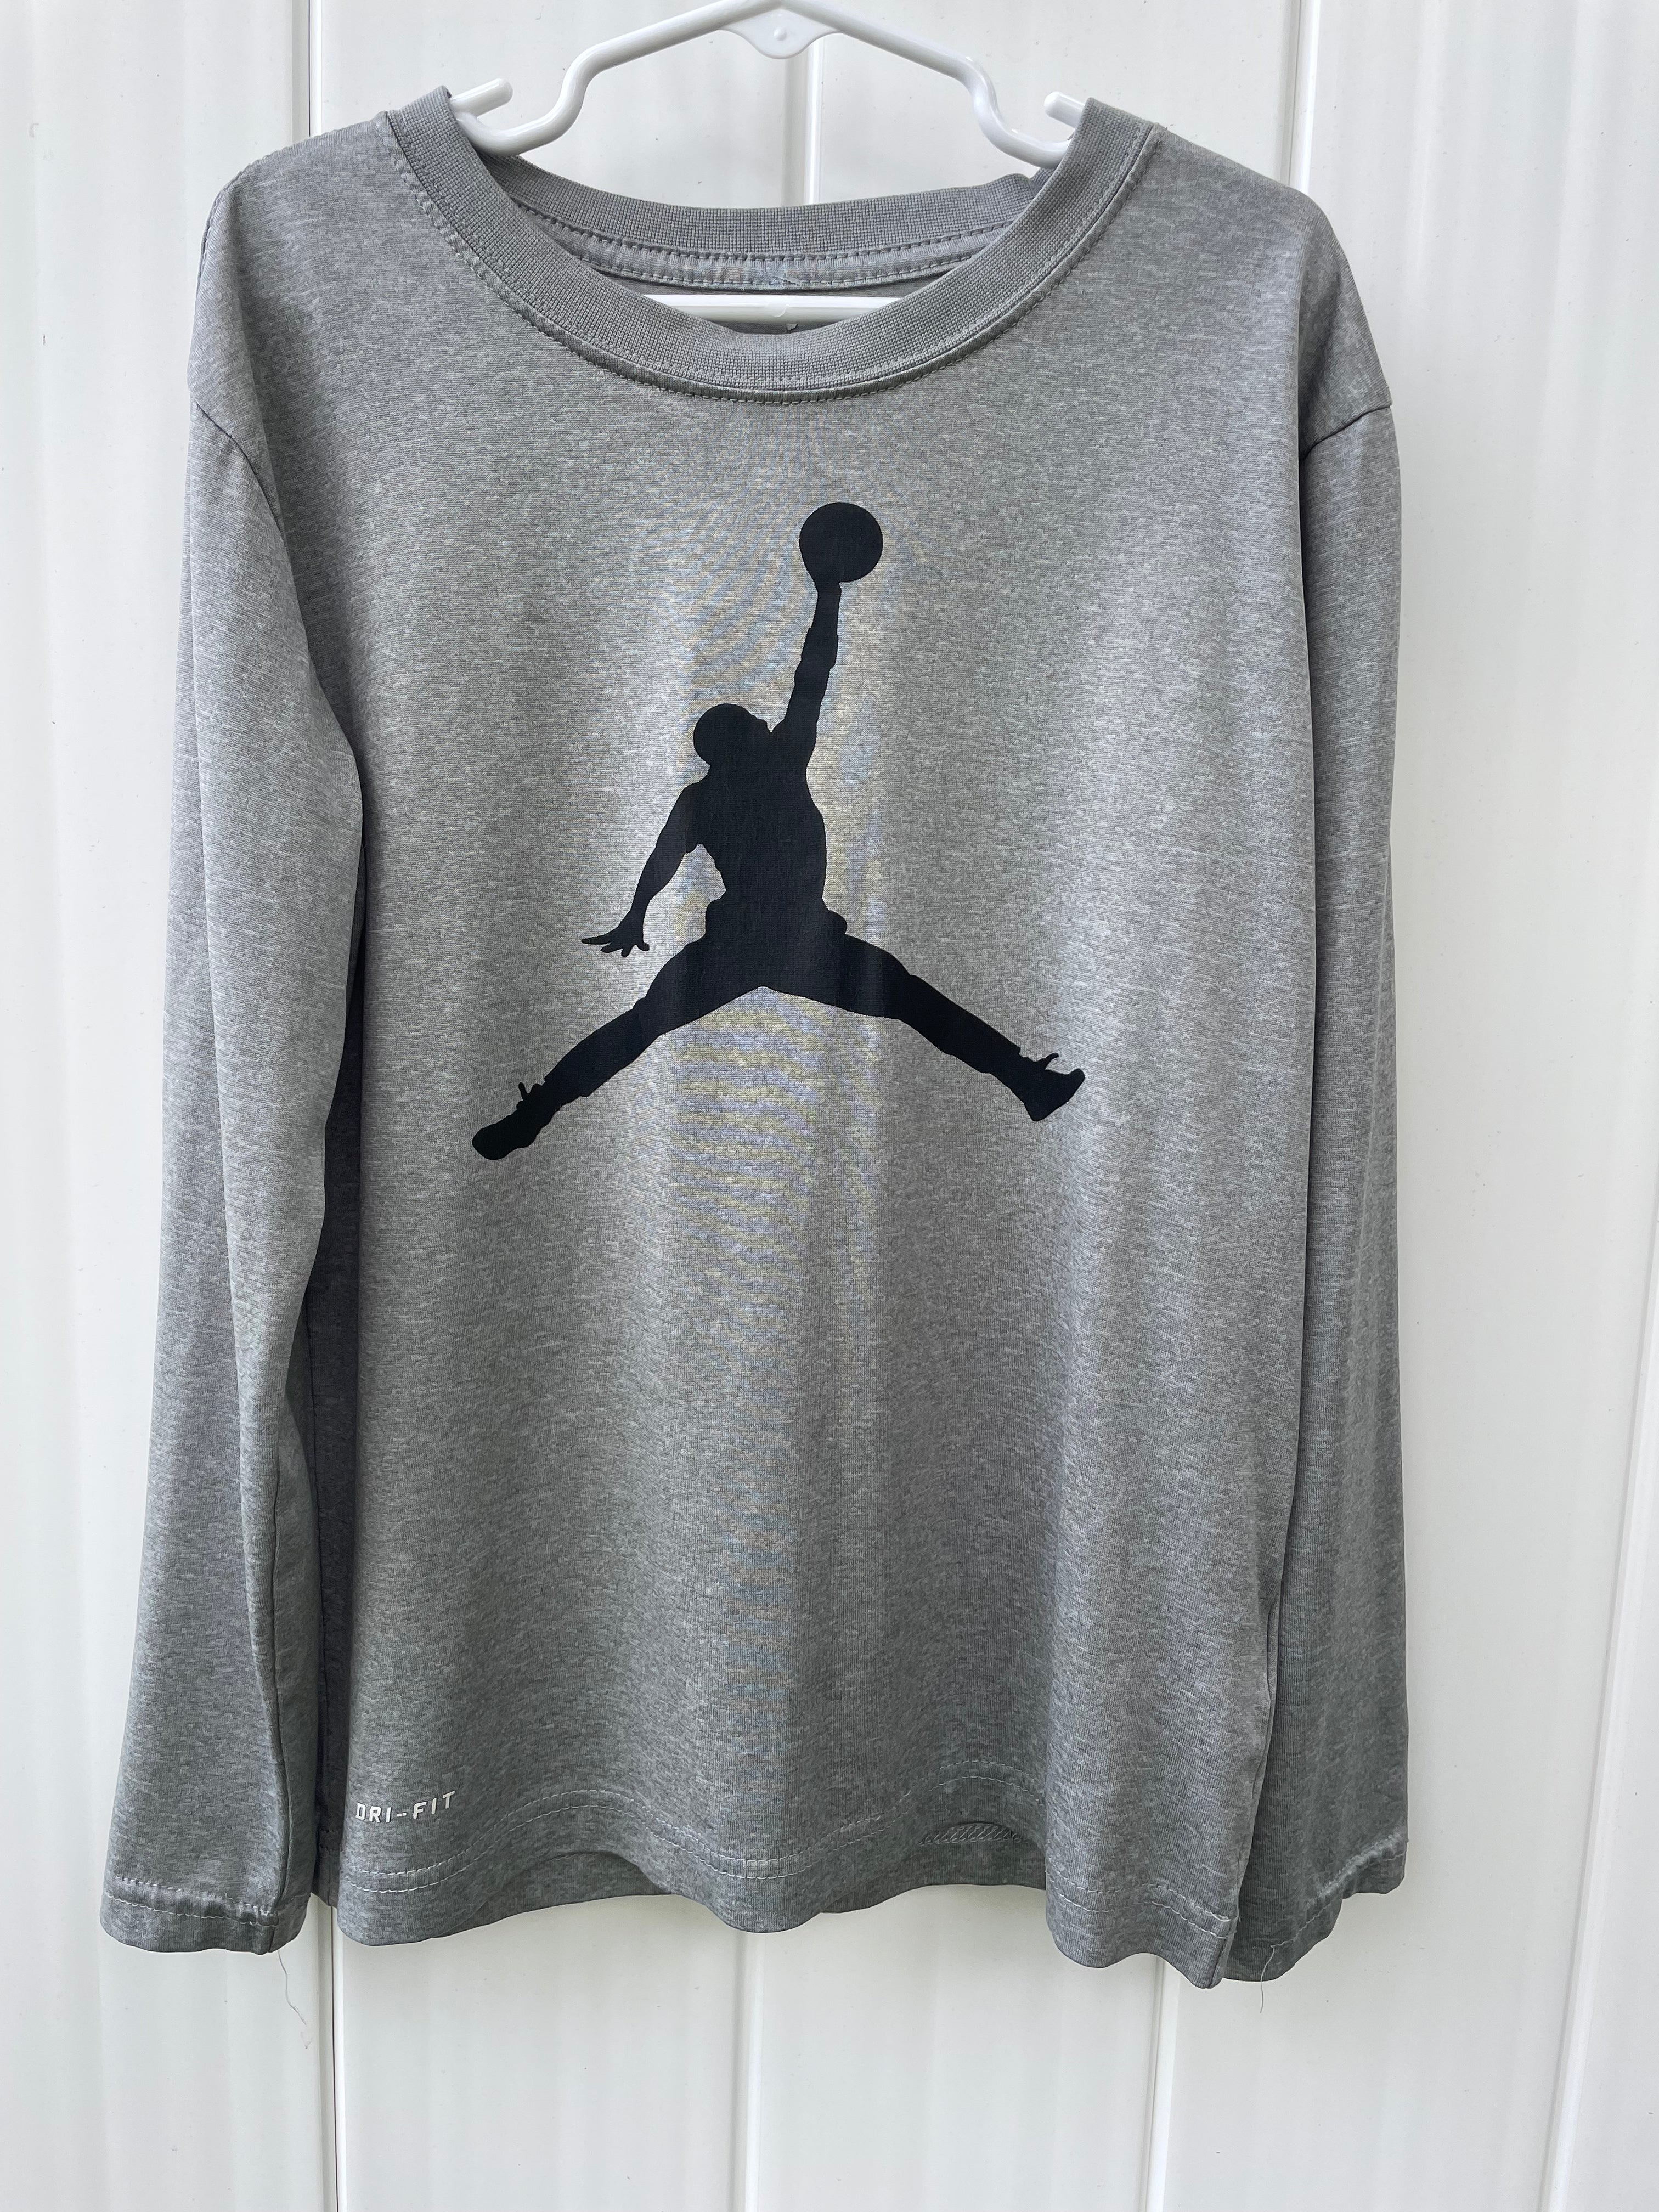 Nike Jordan Shirt, Gray Boys Size 8